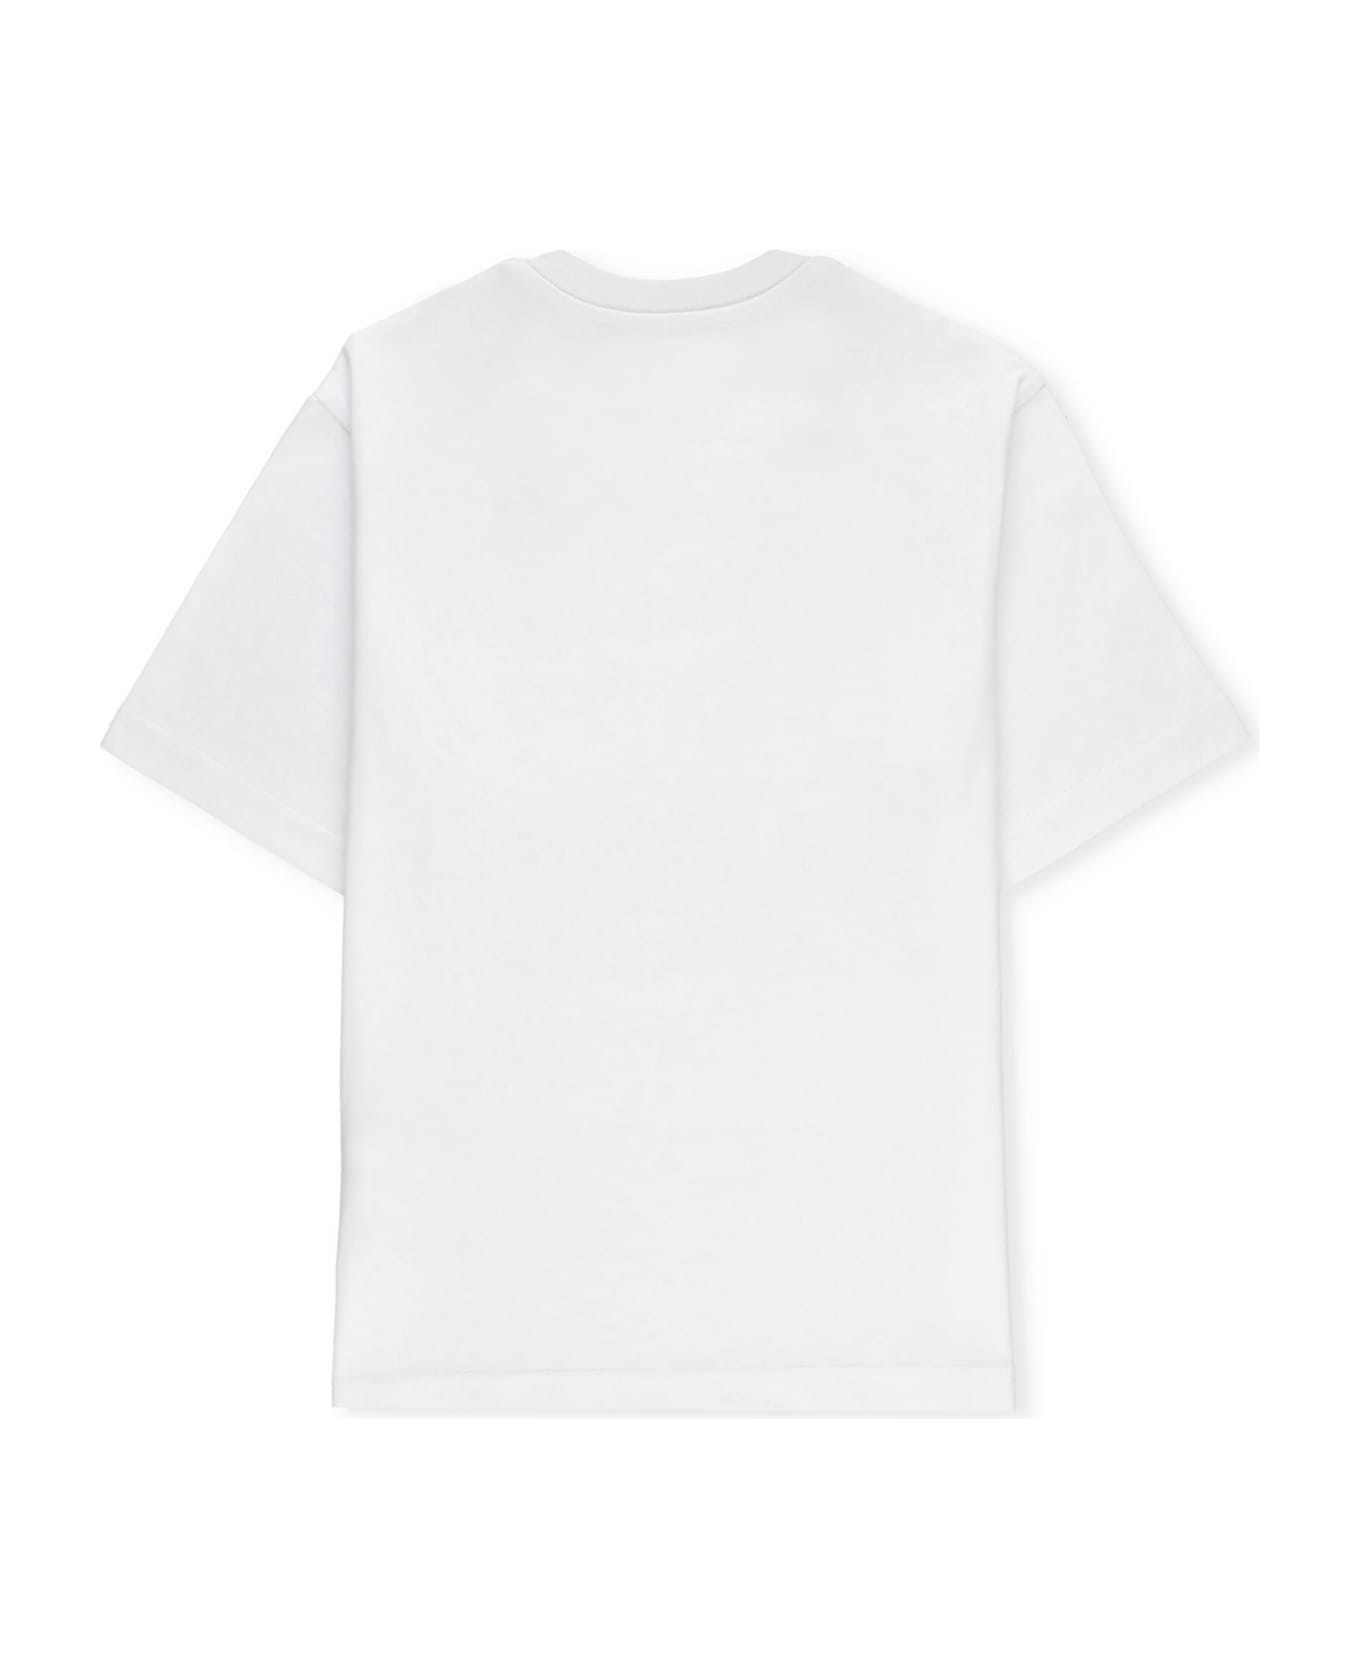 Diesel Just Bigoval T-shirt - White